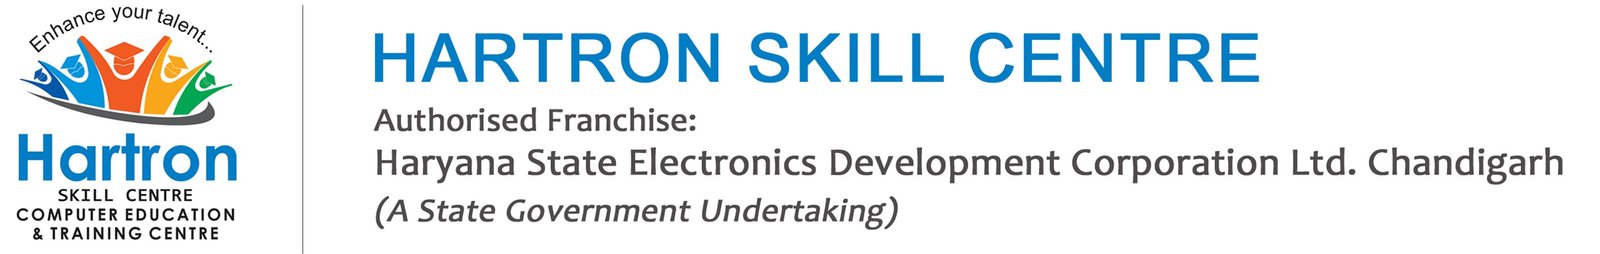 Hartron Rohtak - Hartron Computer Skill Center - Self-employed | LinkedIn